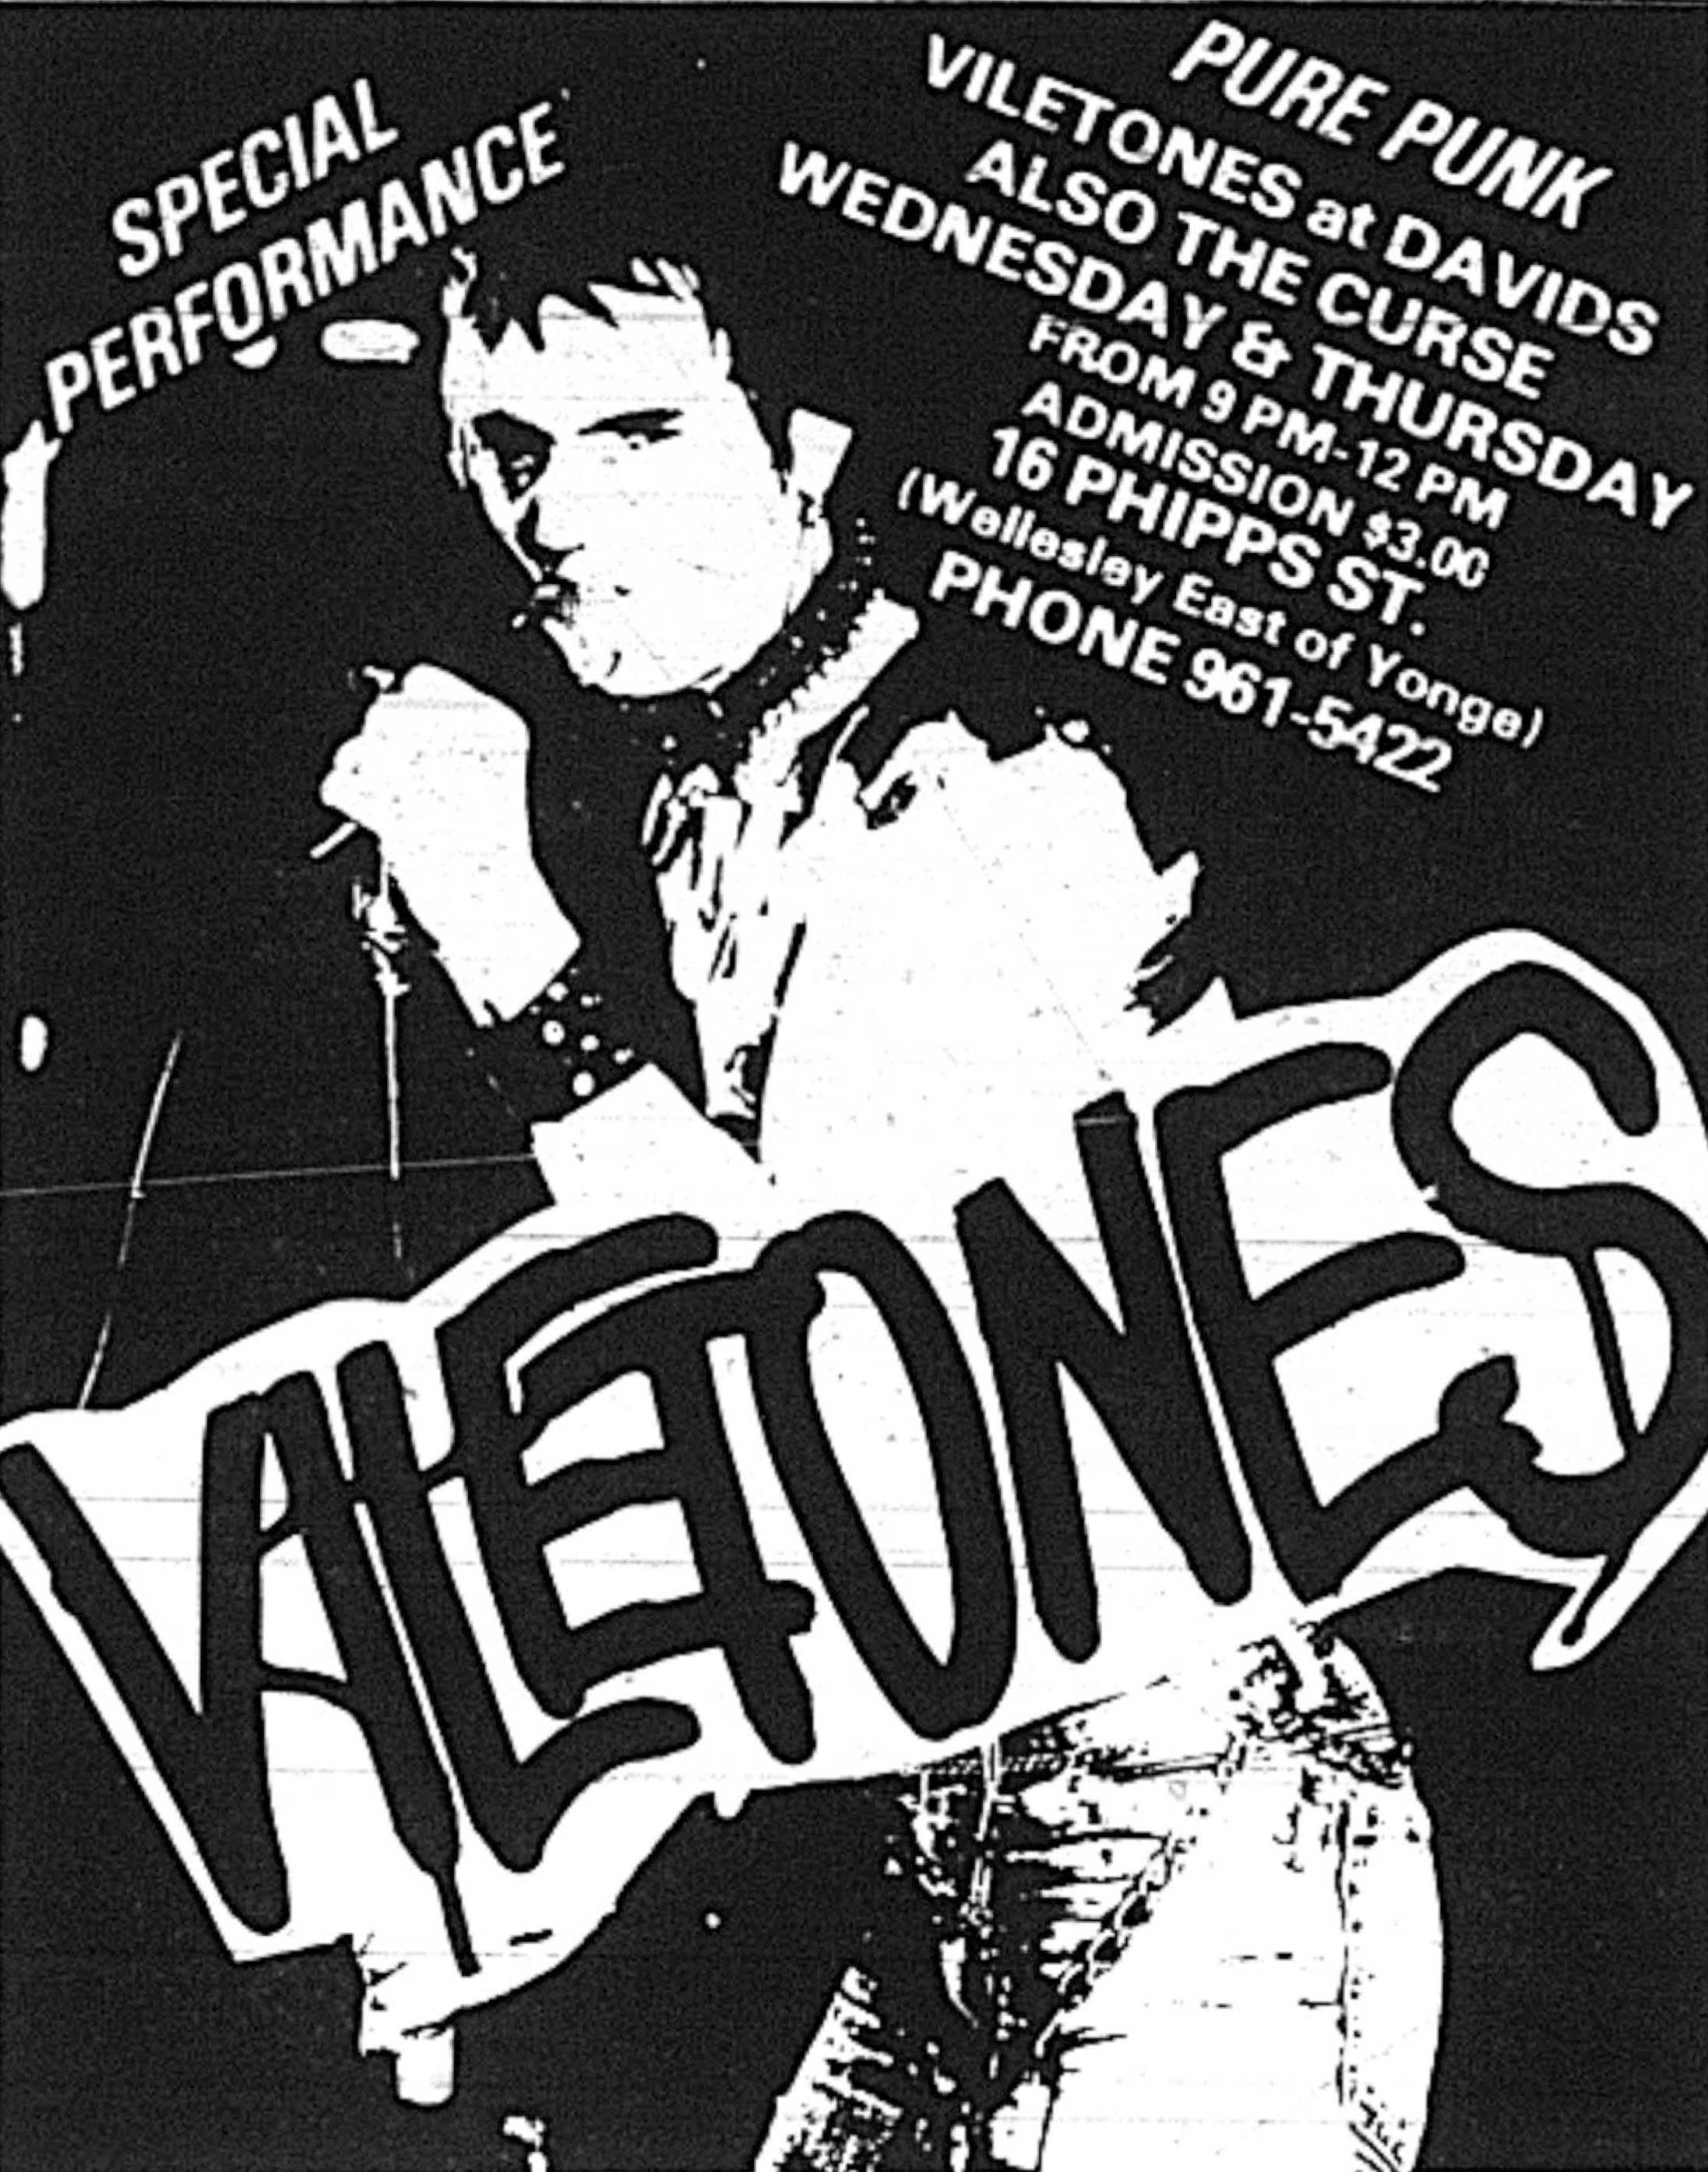 Advertisement for punk band Viletones playing at David's, Sandy LeBlanc's club